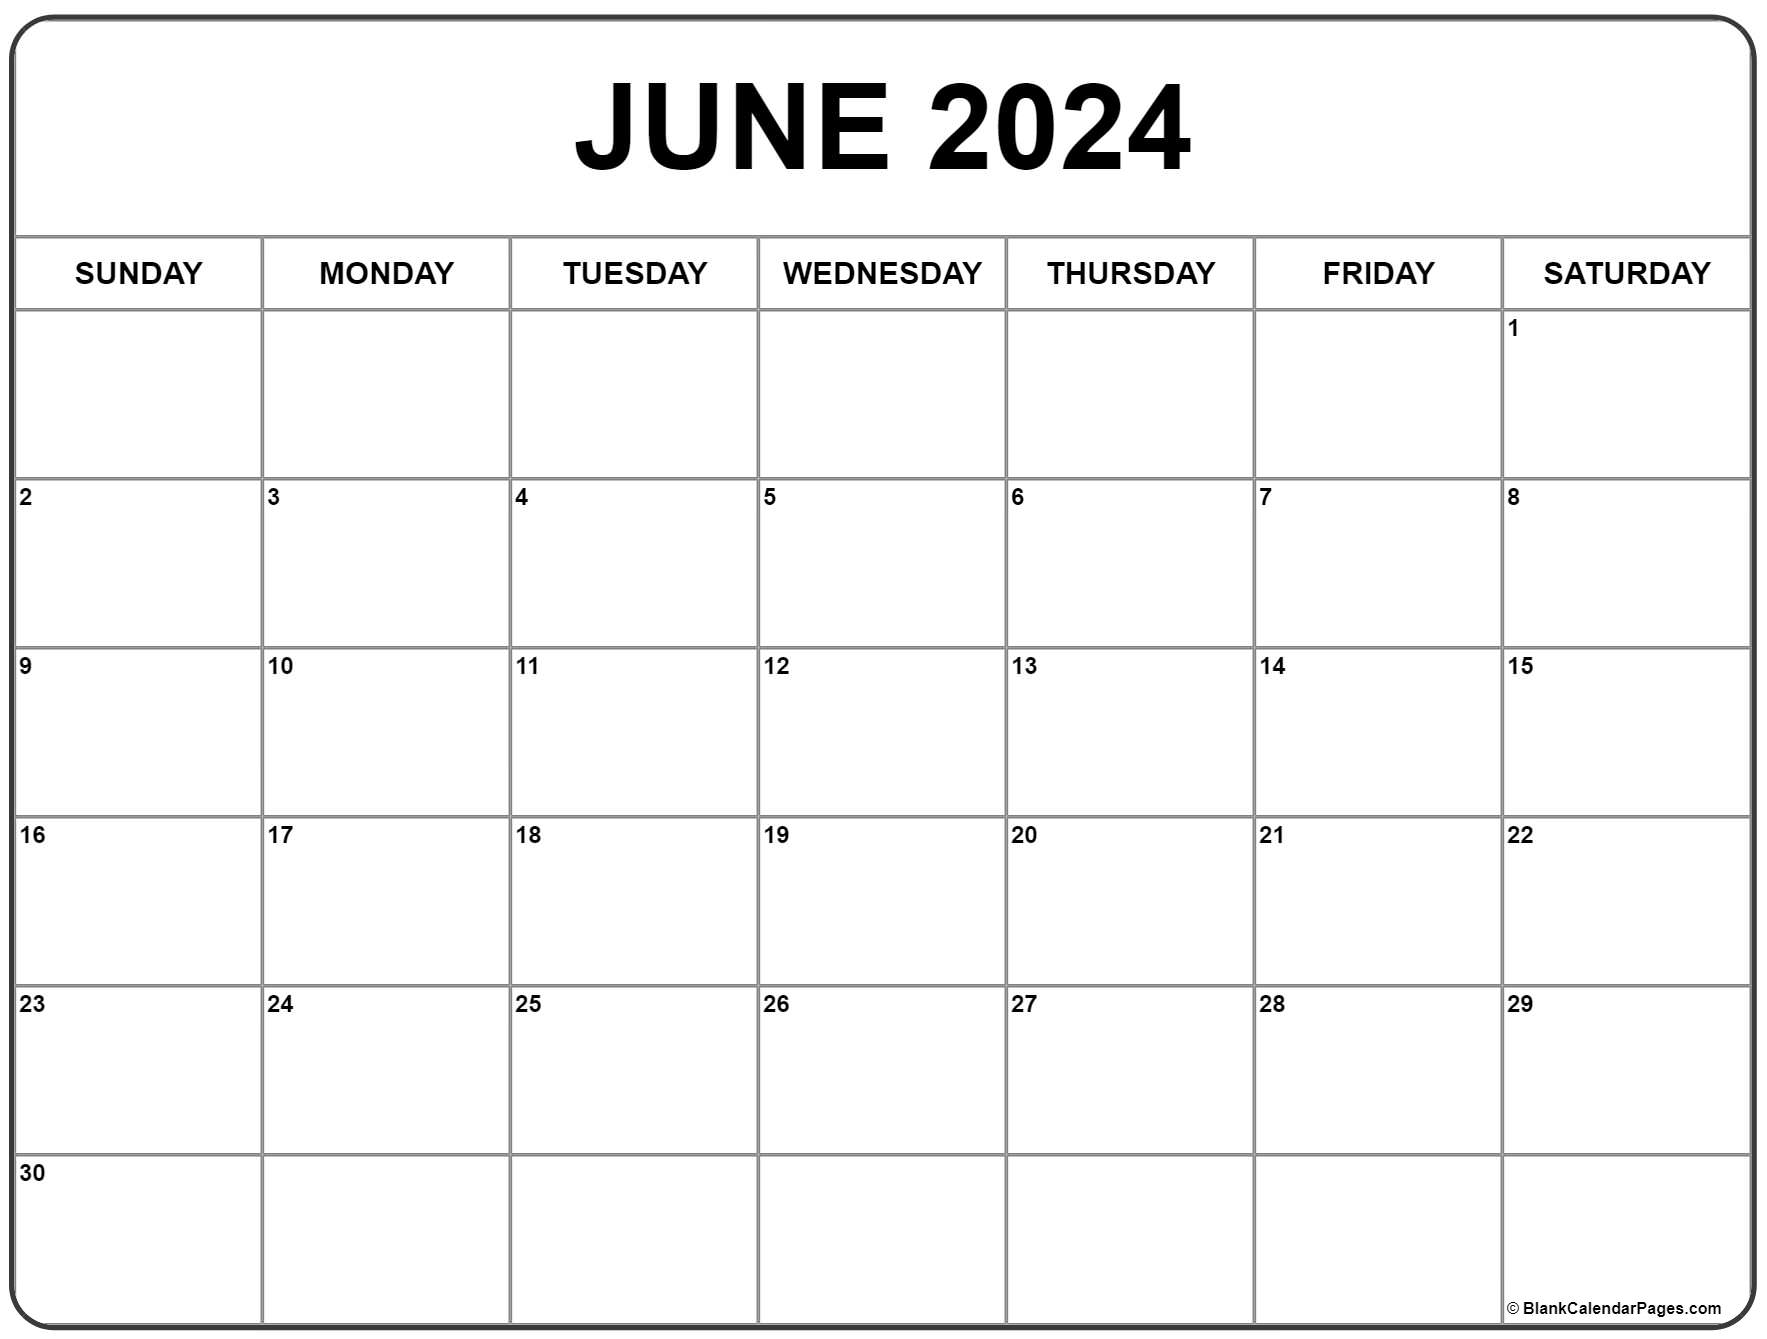 June 2024 Calendar | Free Printable Calendar for Printable Calendar June 2024 Free